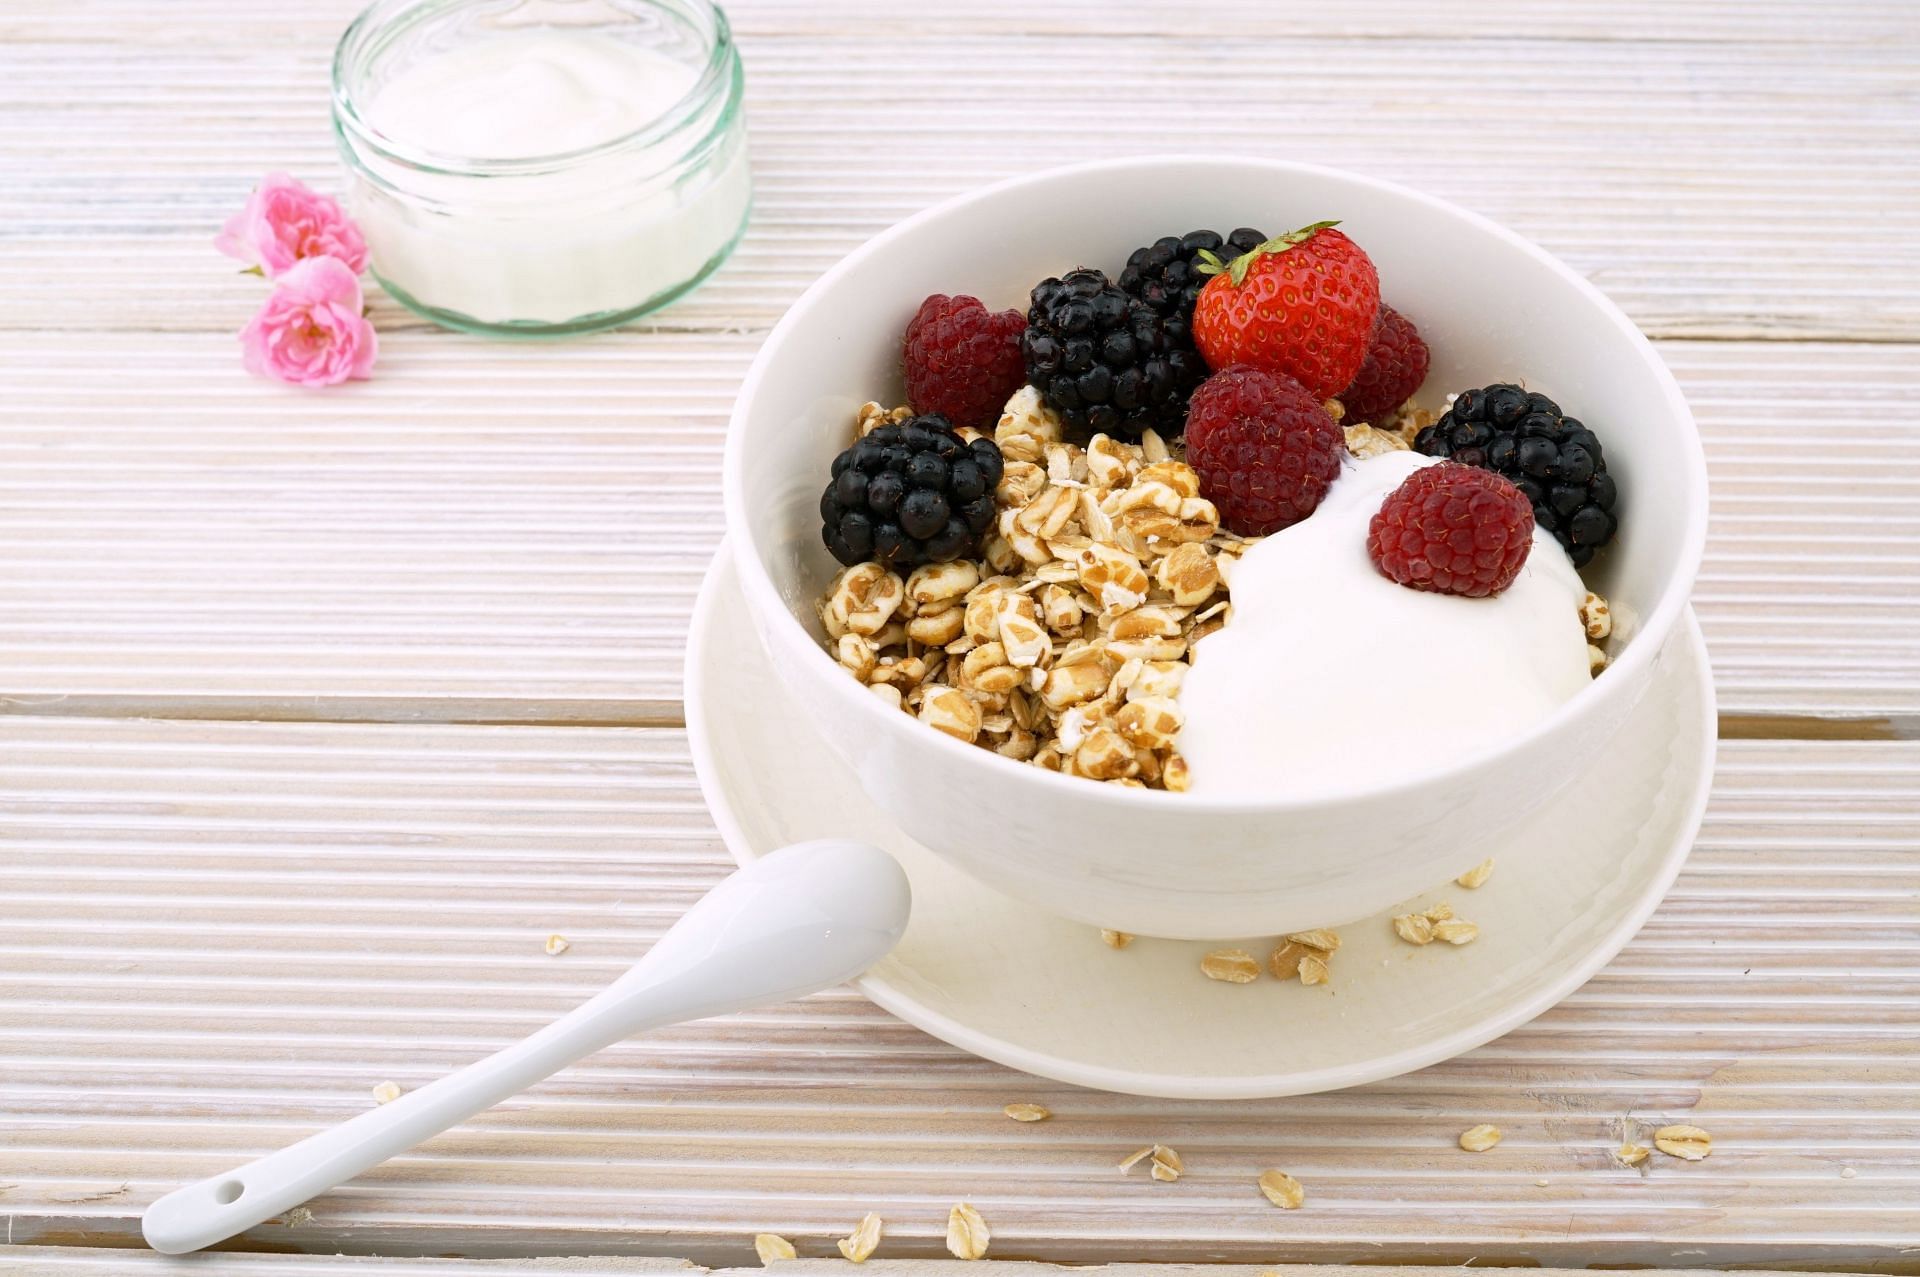 Eating yogurt can help increase healthy bacteria in the gut. (Image via Pexels/Life of Pix)